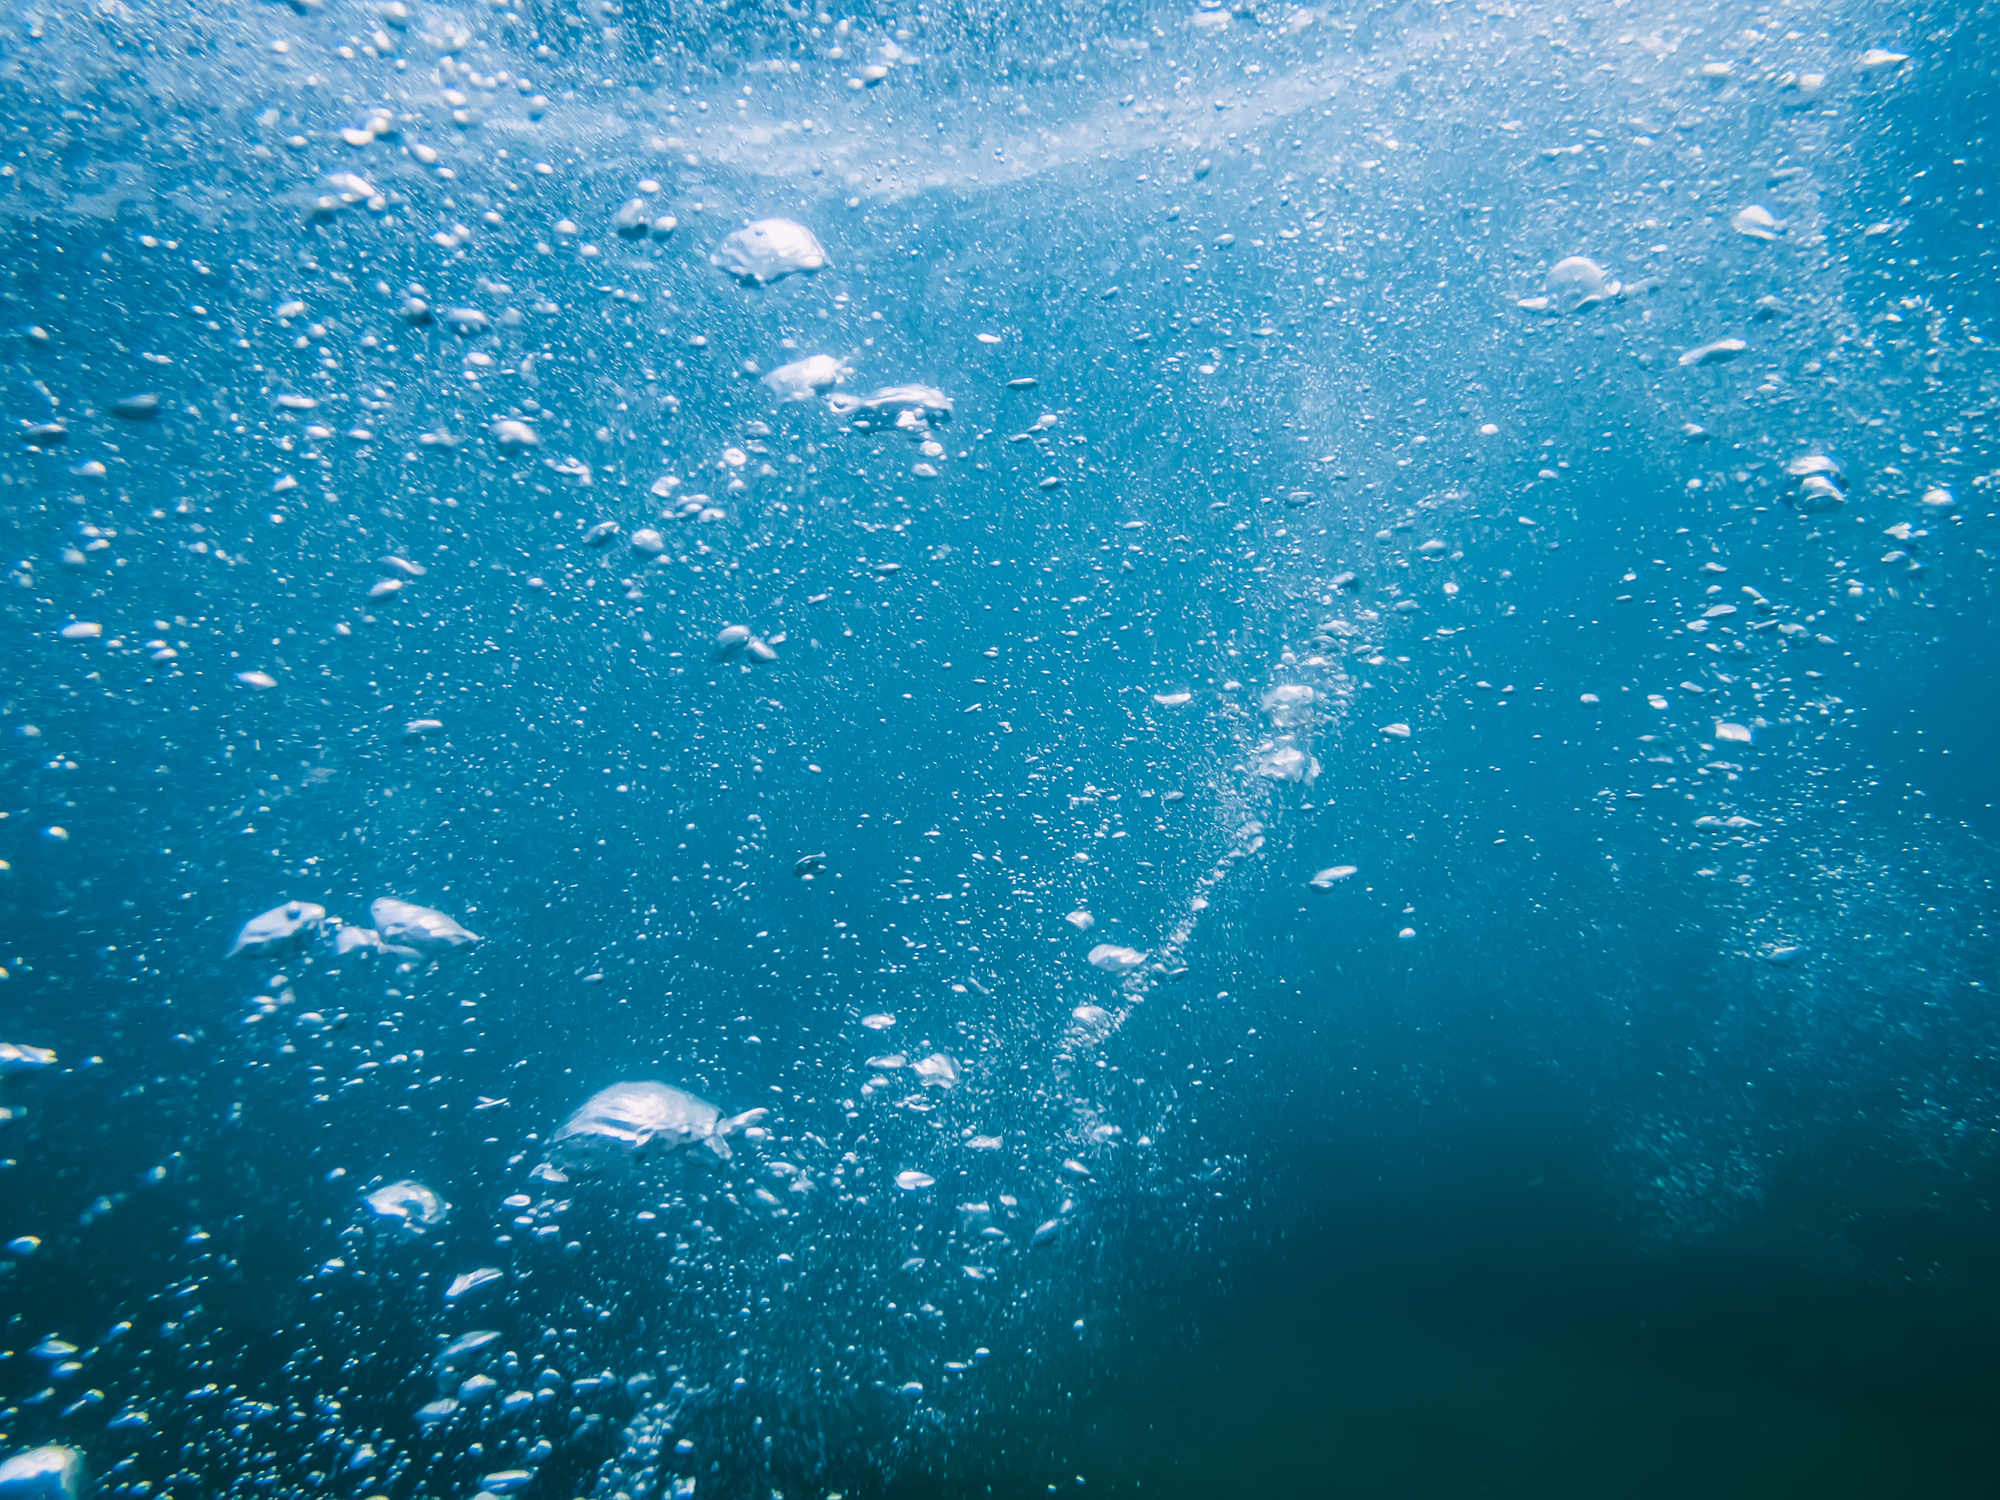 Underwater sound waves help scientists locate ocean impacts - News